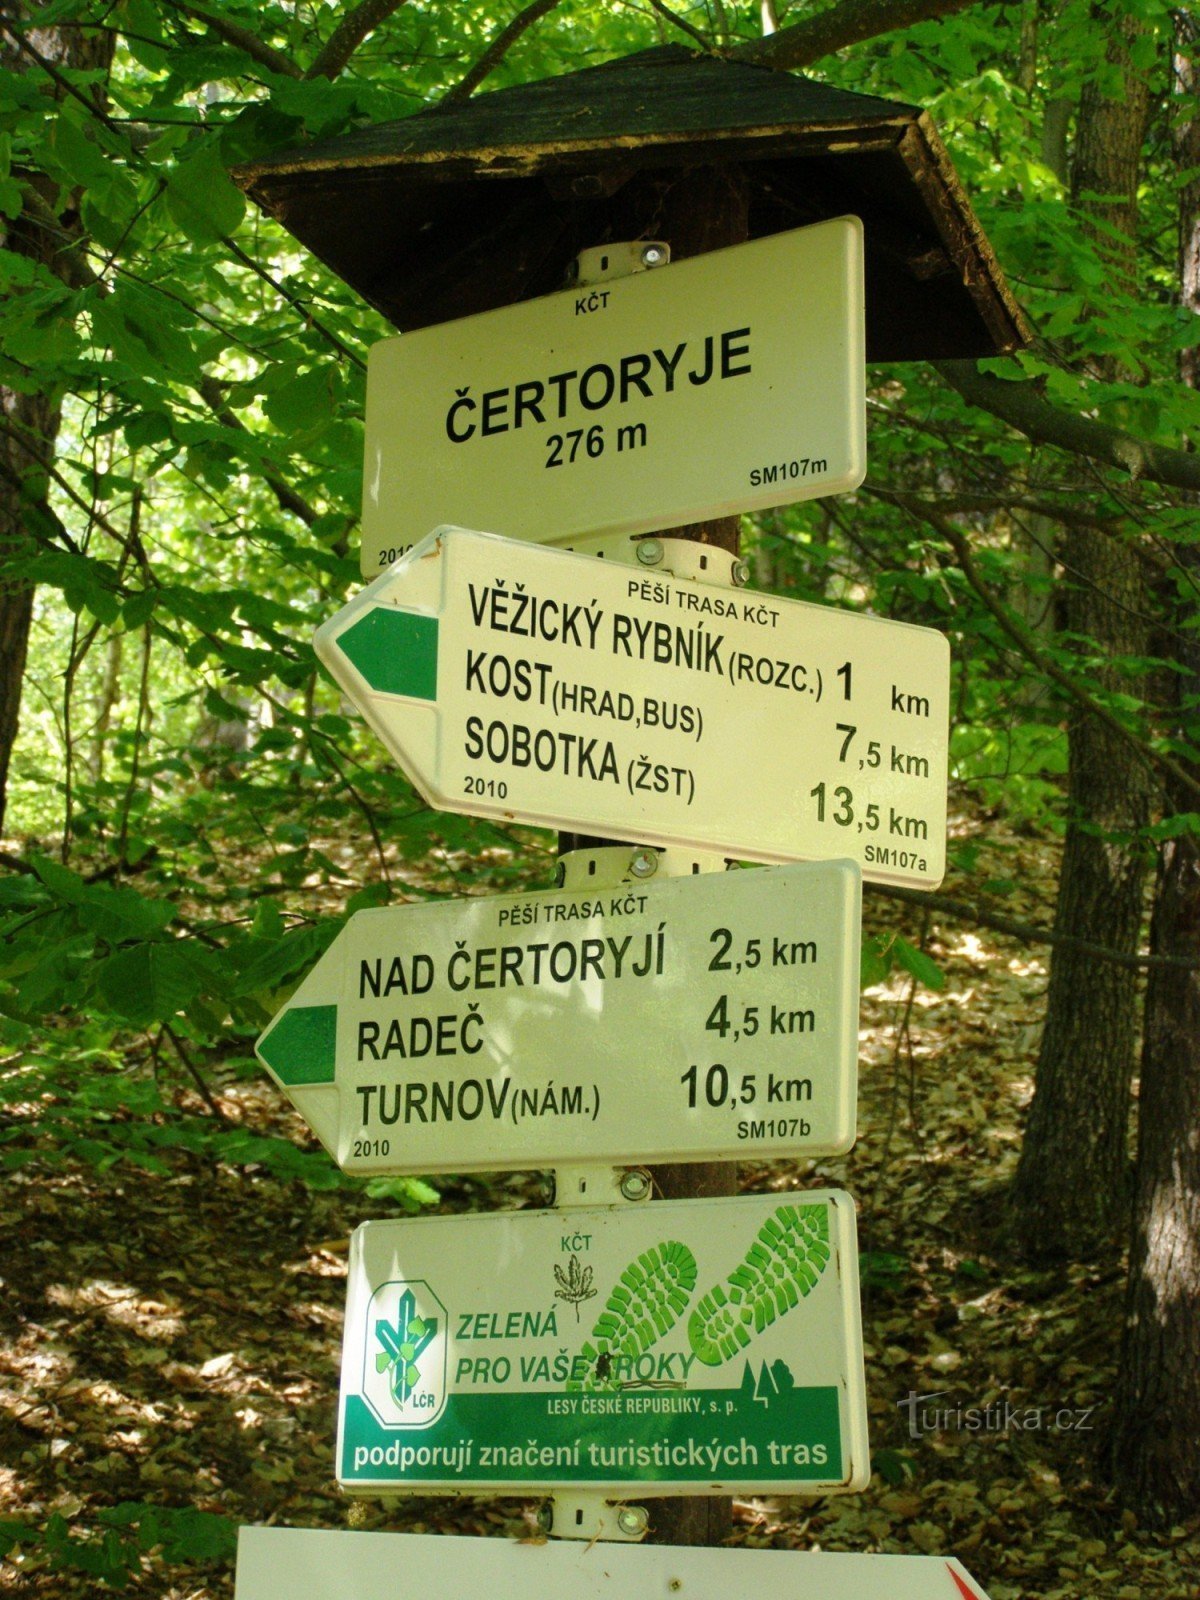 ngã tư du lịch của Čertoryje